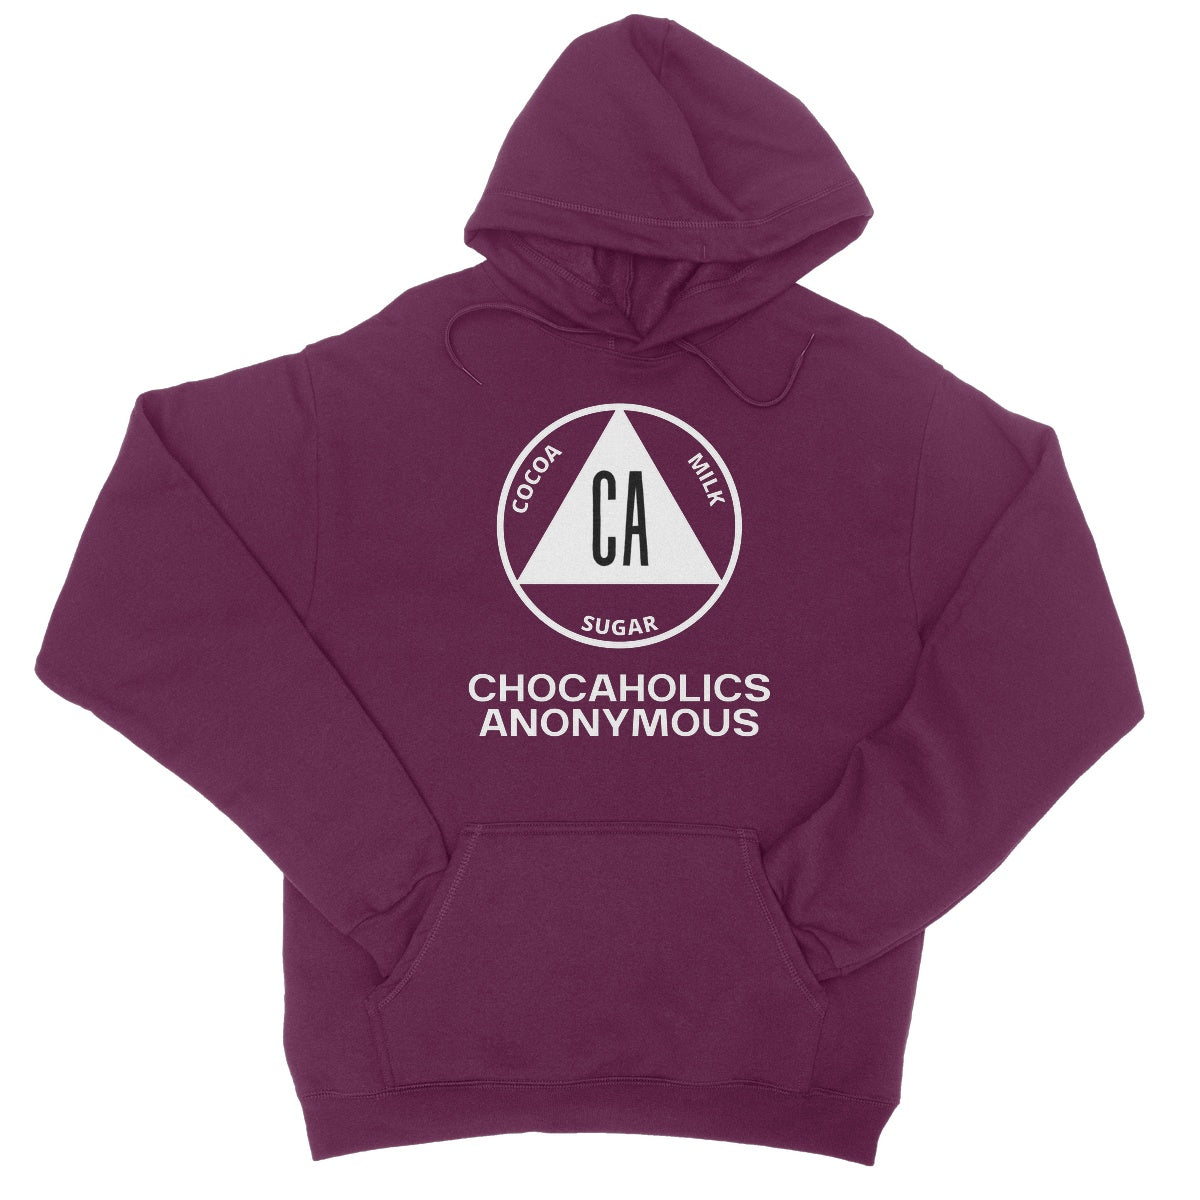 chocaholics anonymous hoodie purple